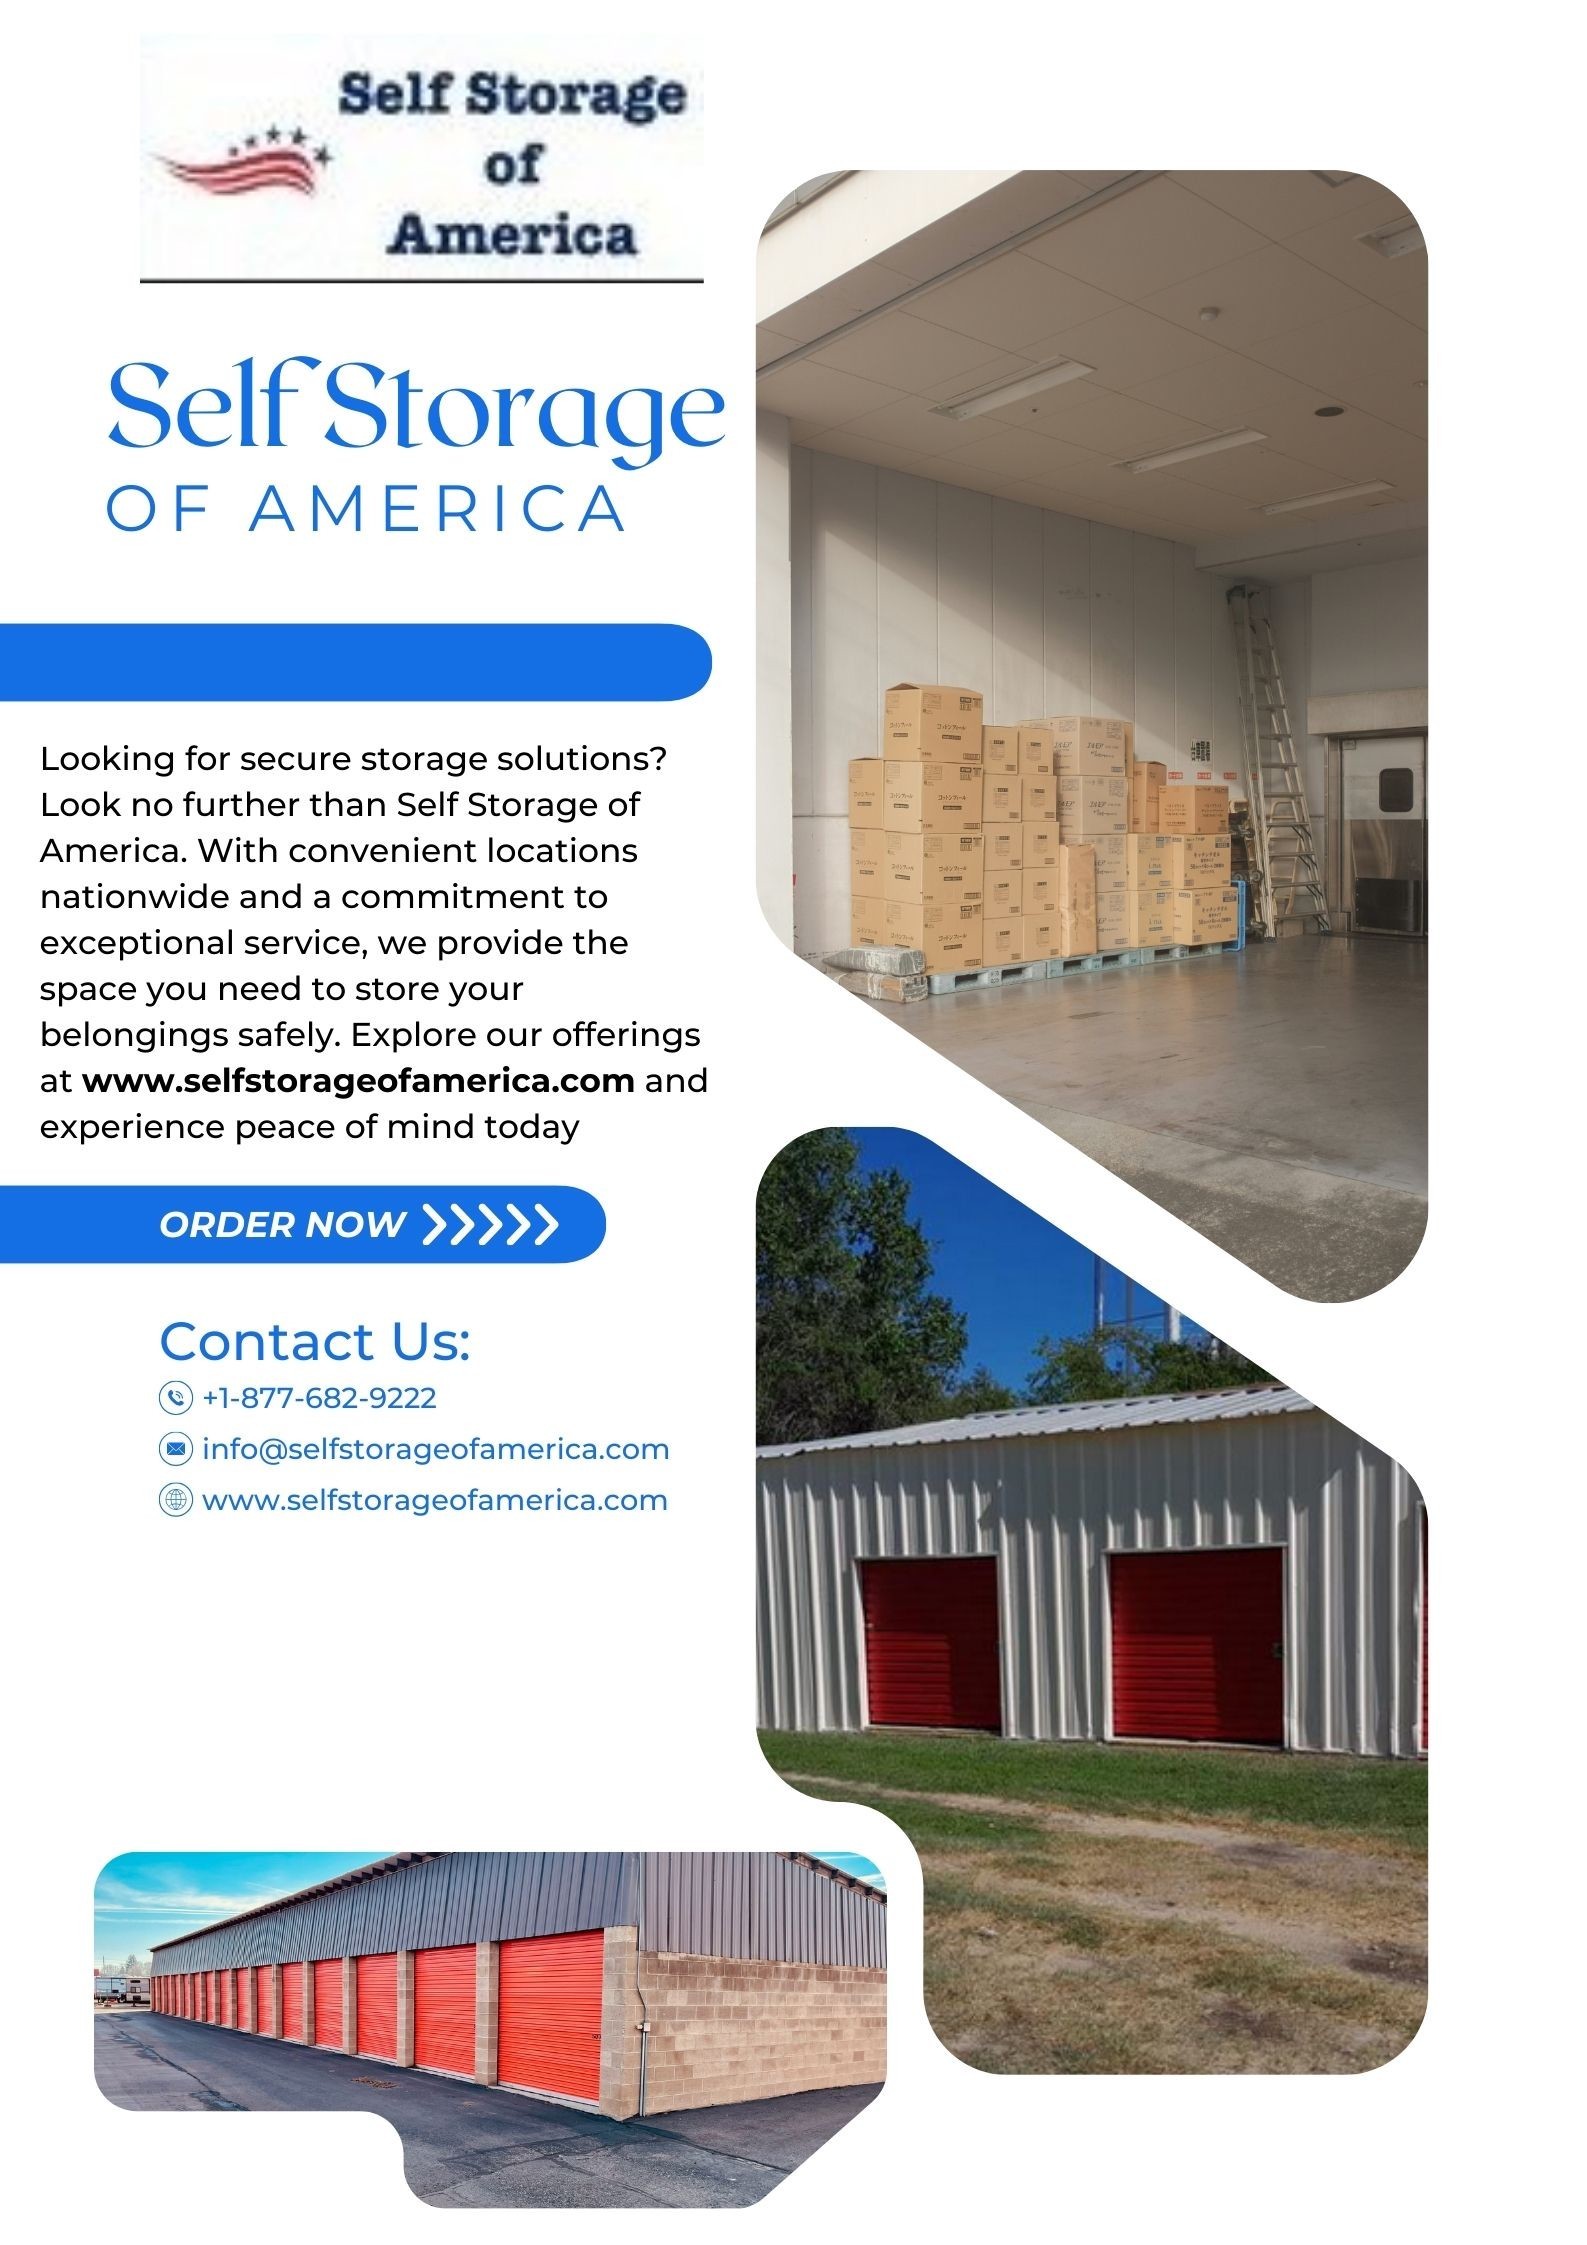 Self Storage of America - www.selfstorageofamerica.com